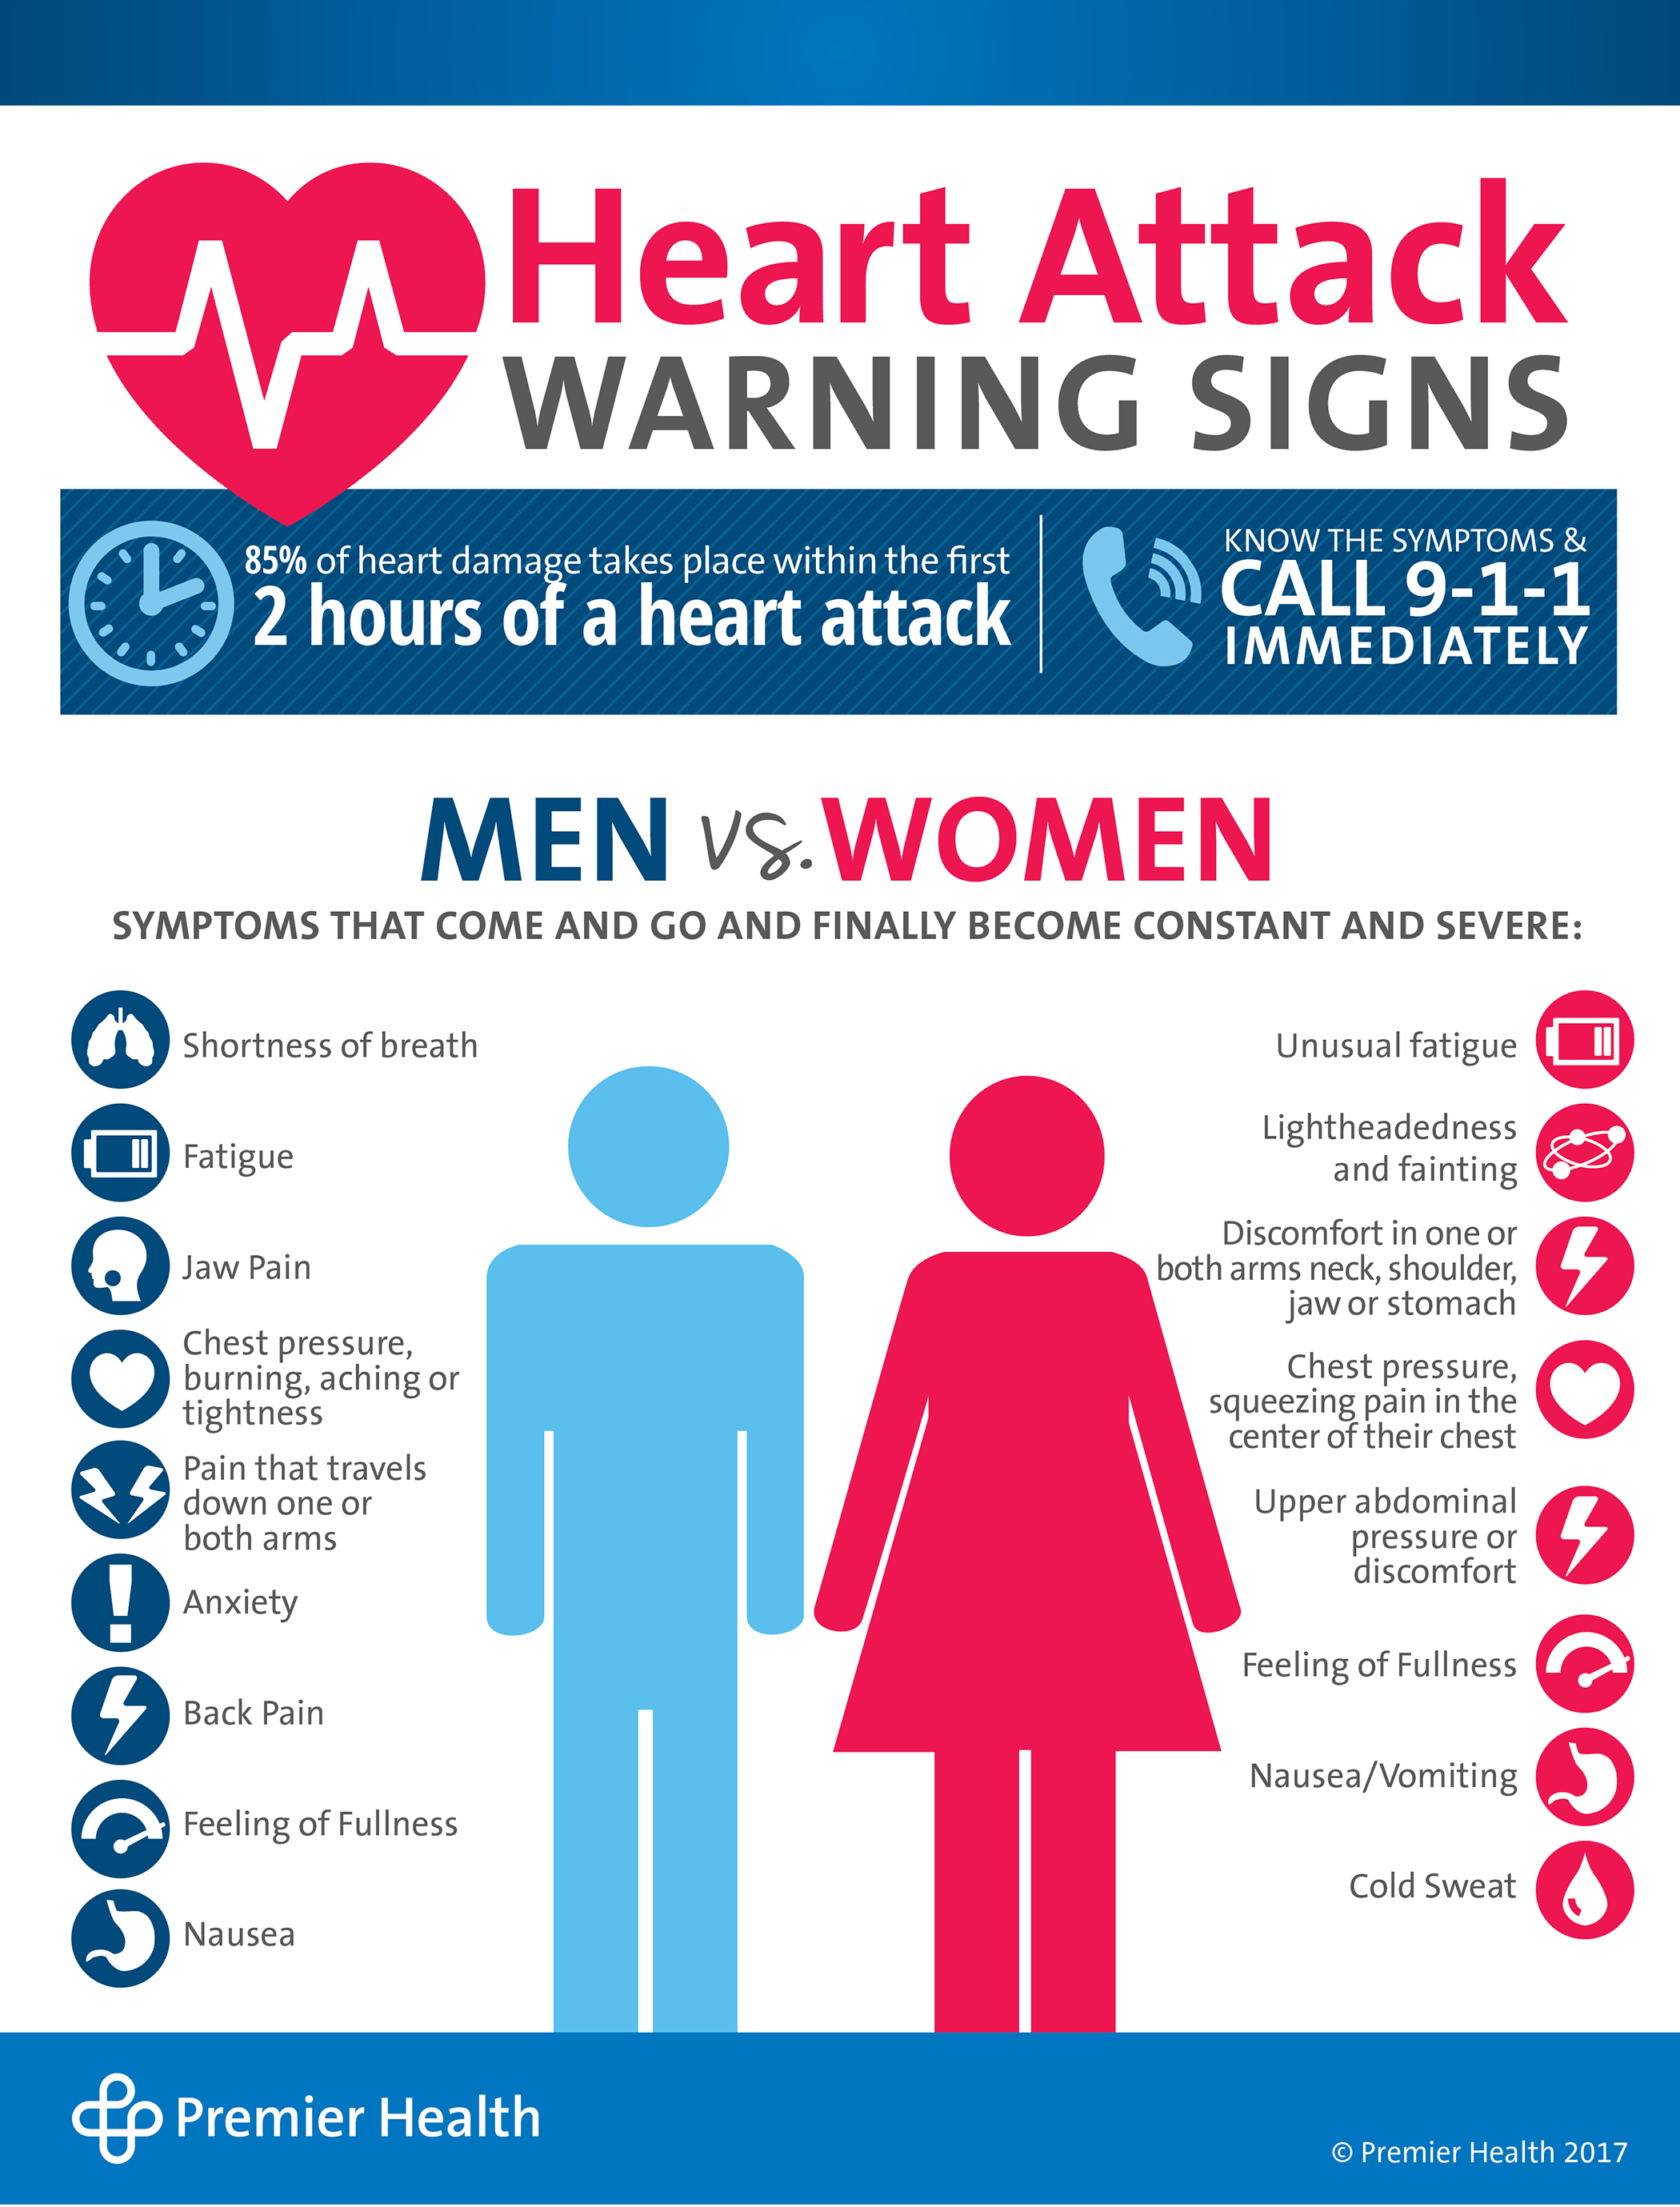 5 Fun Facts About Heart Attack - PELAJARAN